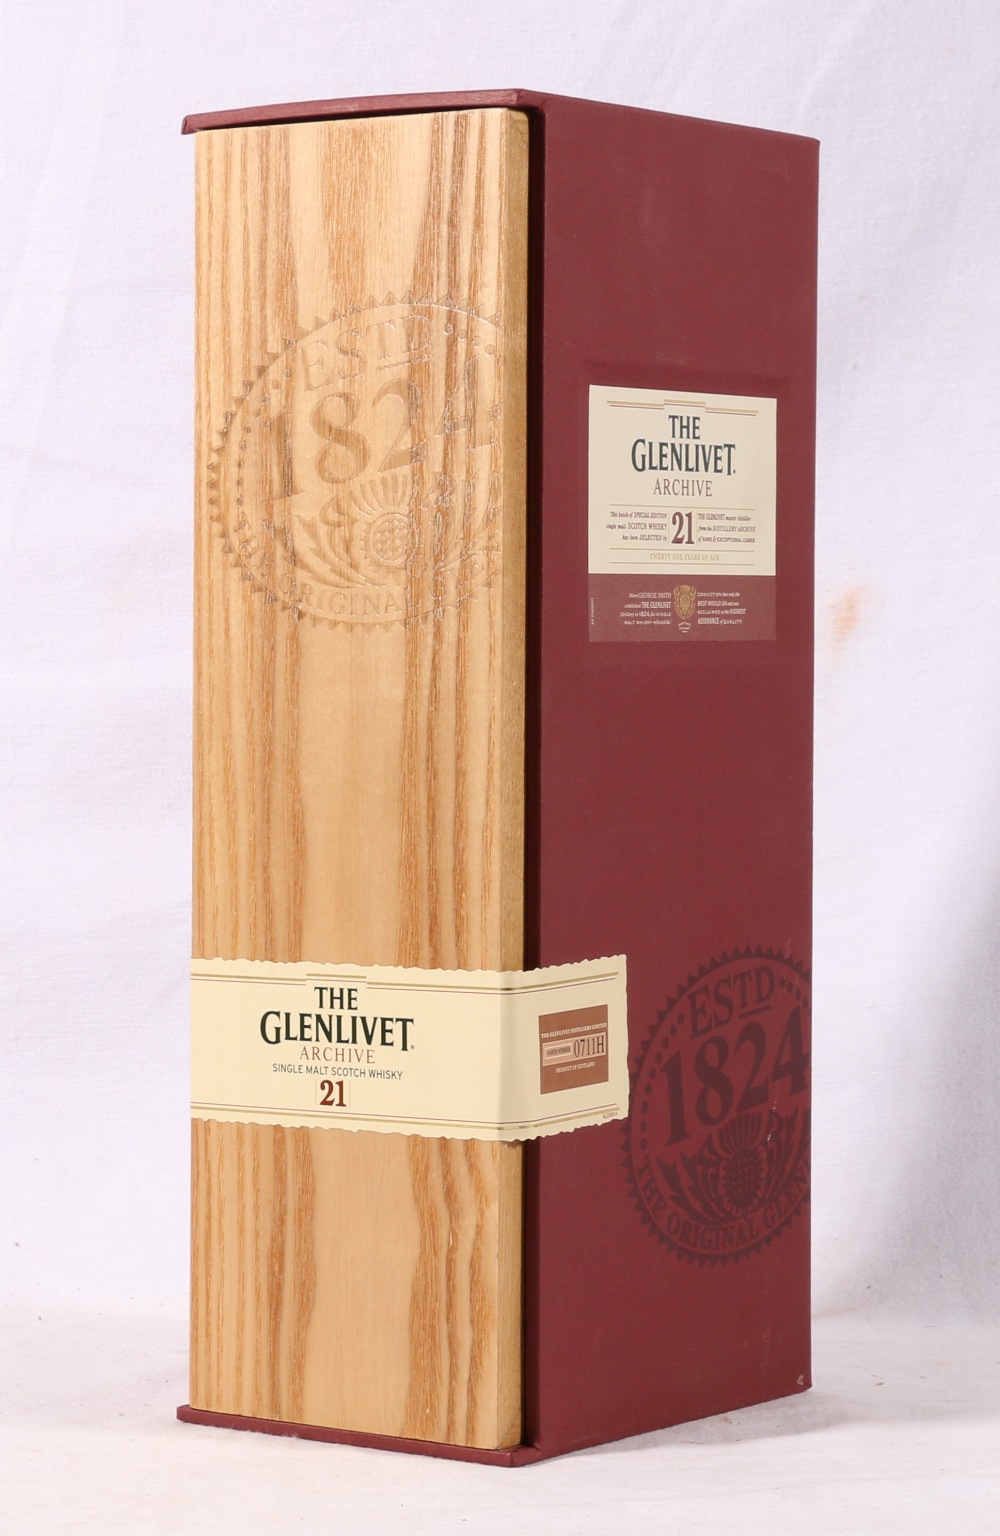 THE GLENLIVET Archive 21 year old Campbeltown single malt Scotch whisky,